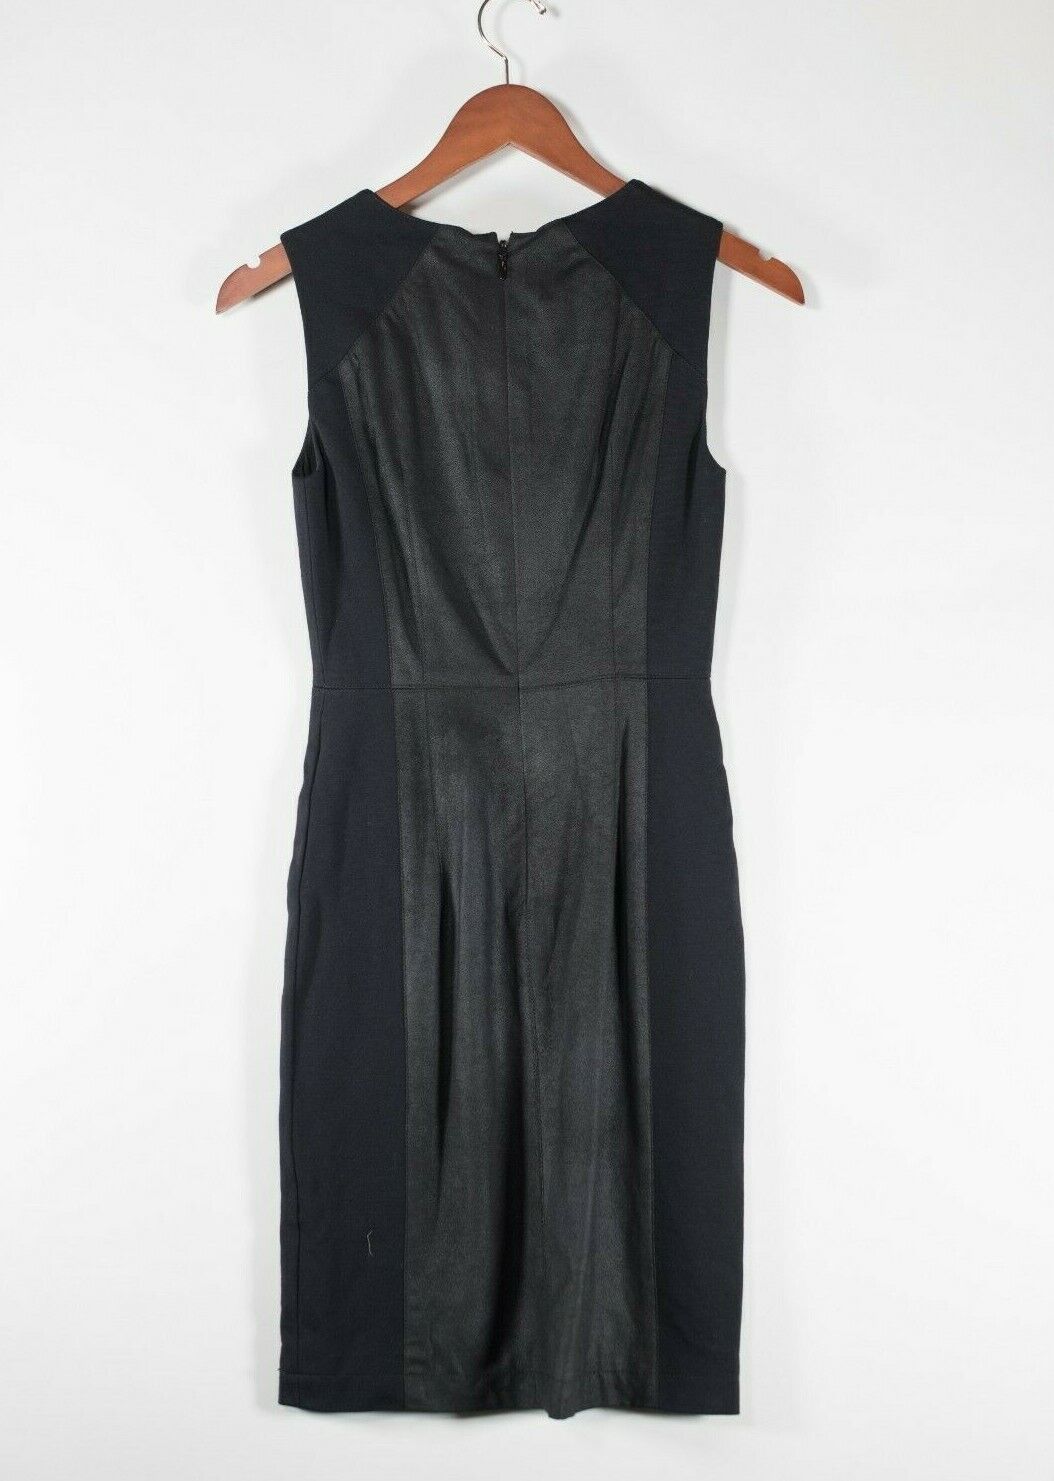 BCBG Maxazria Women's Size 0 XS Black Shift Dress Sleeveless Faux Suede Mini